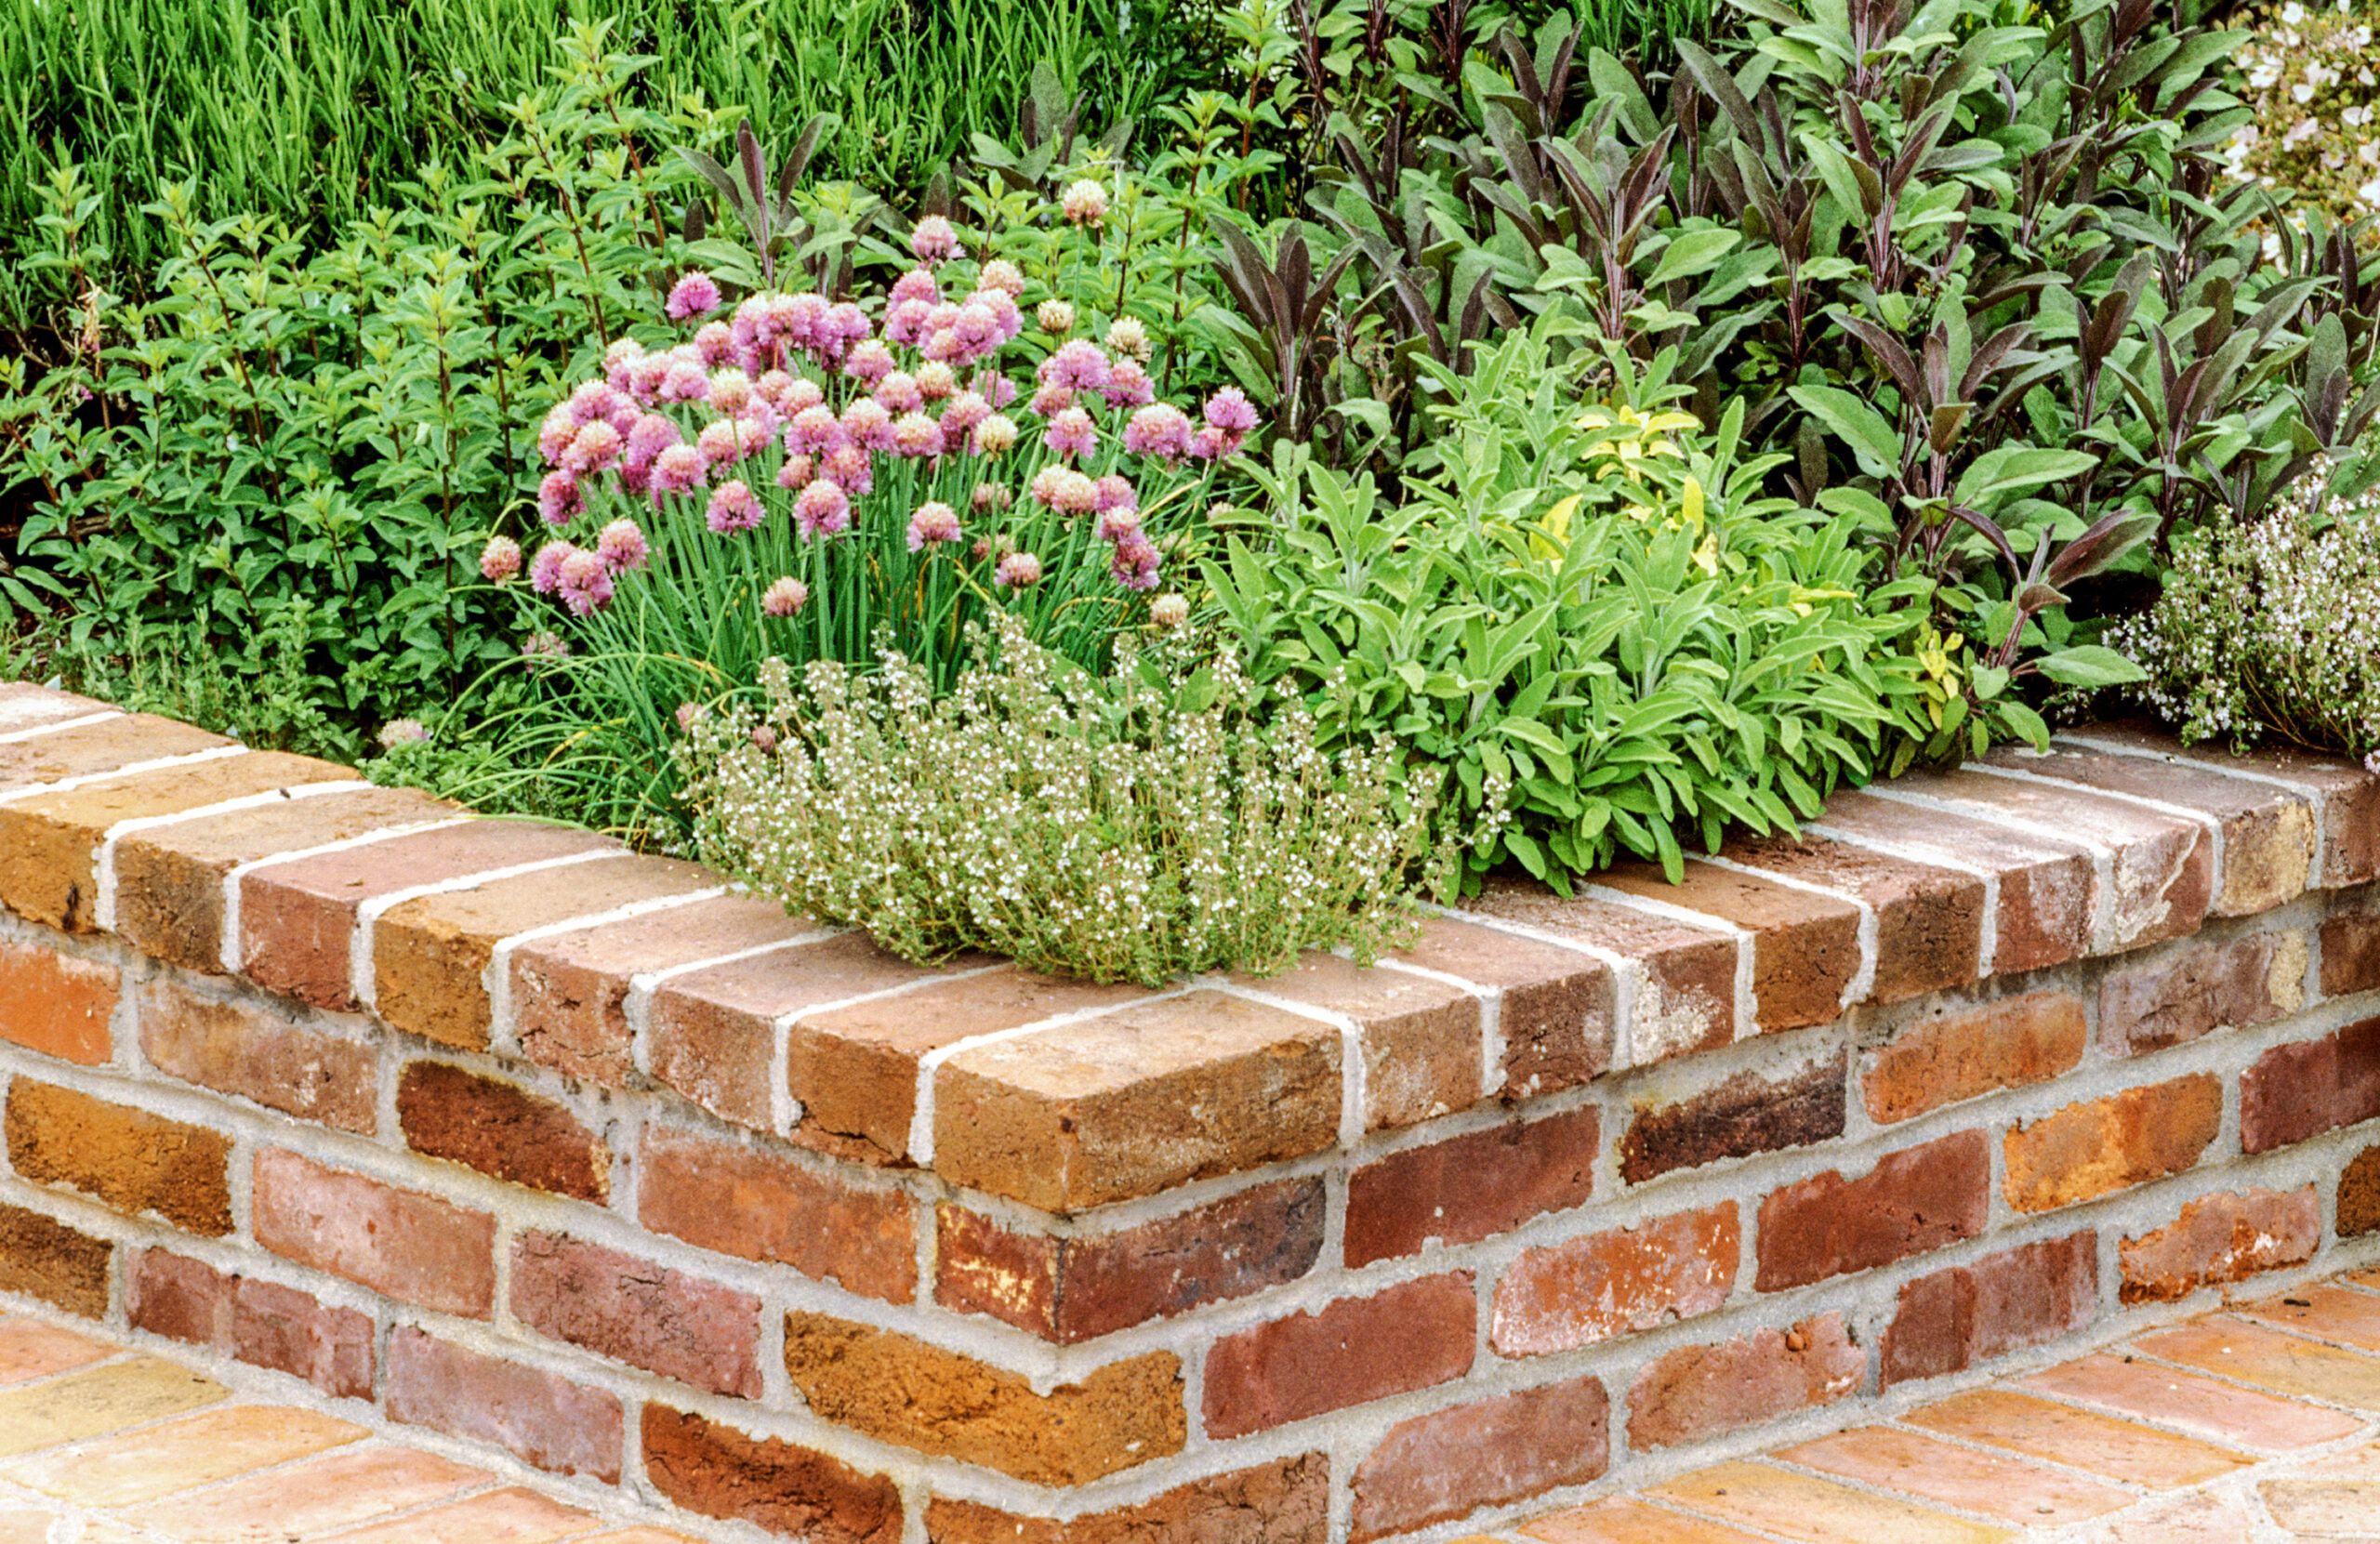 These Bricks Make Building Raised Garden Beds Simple